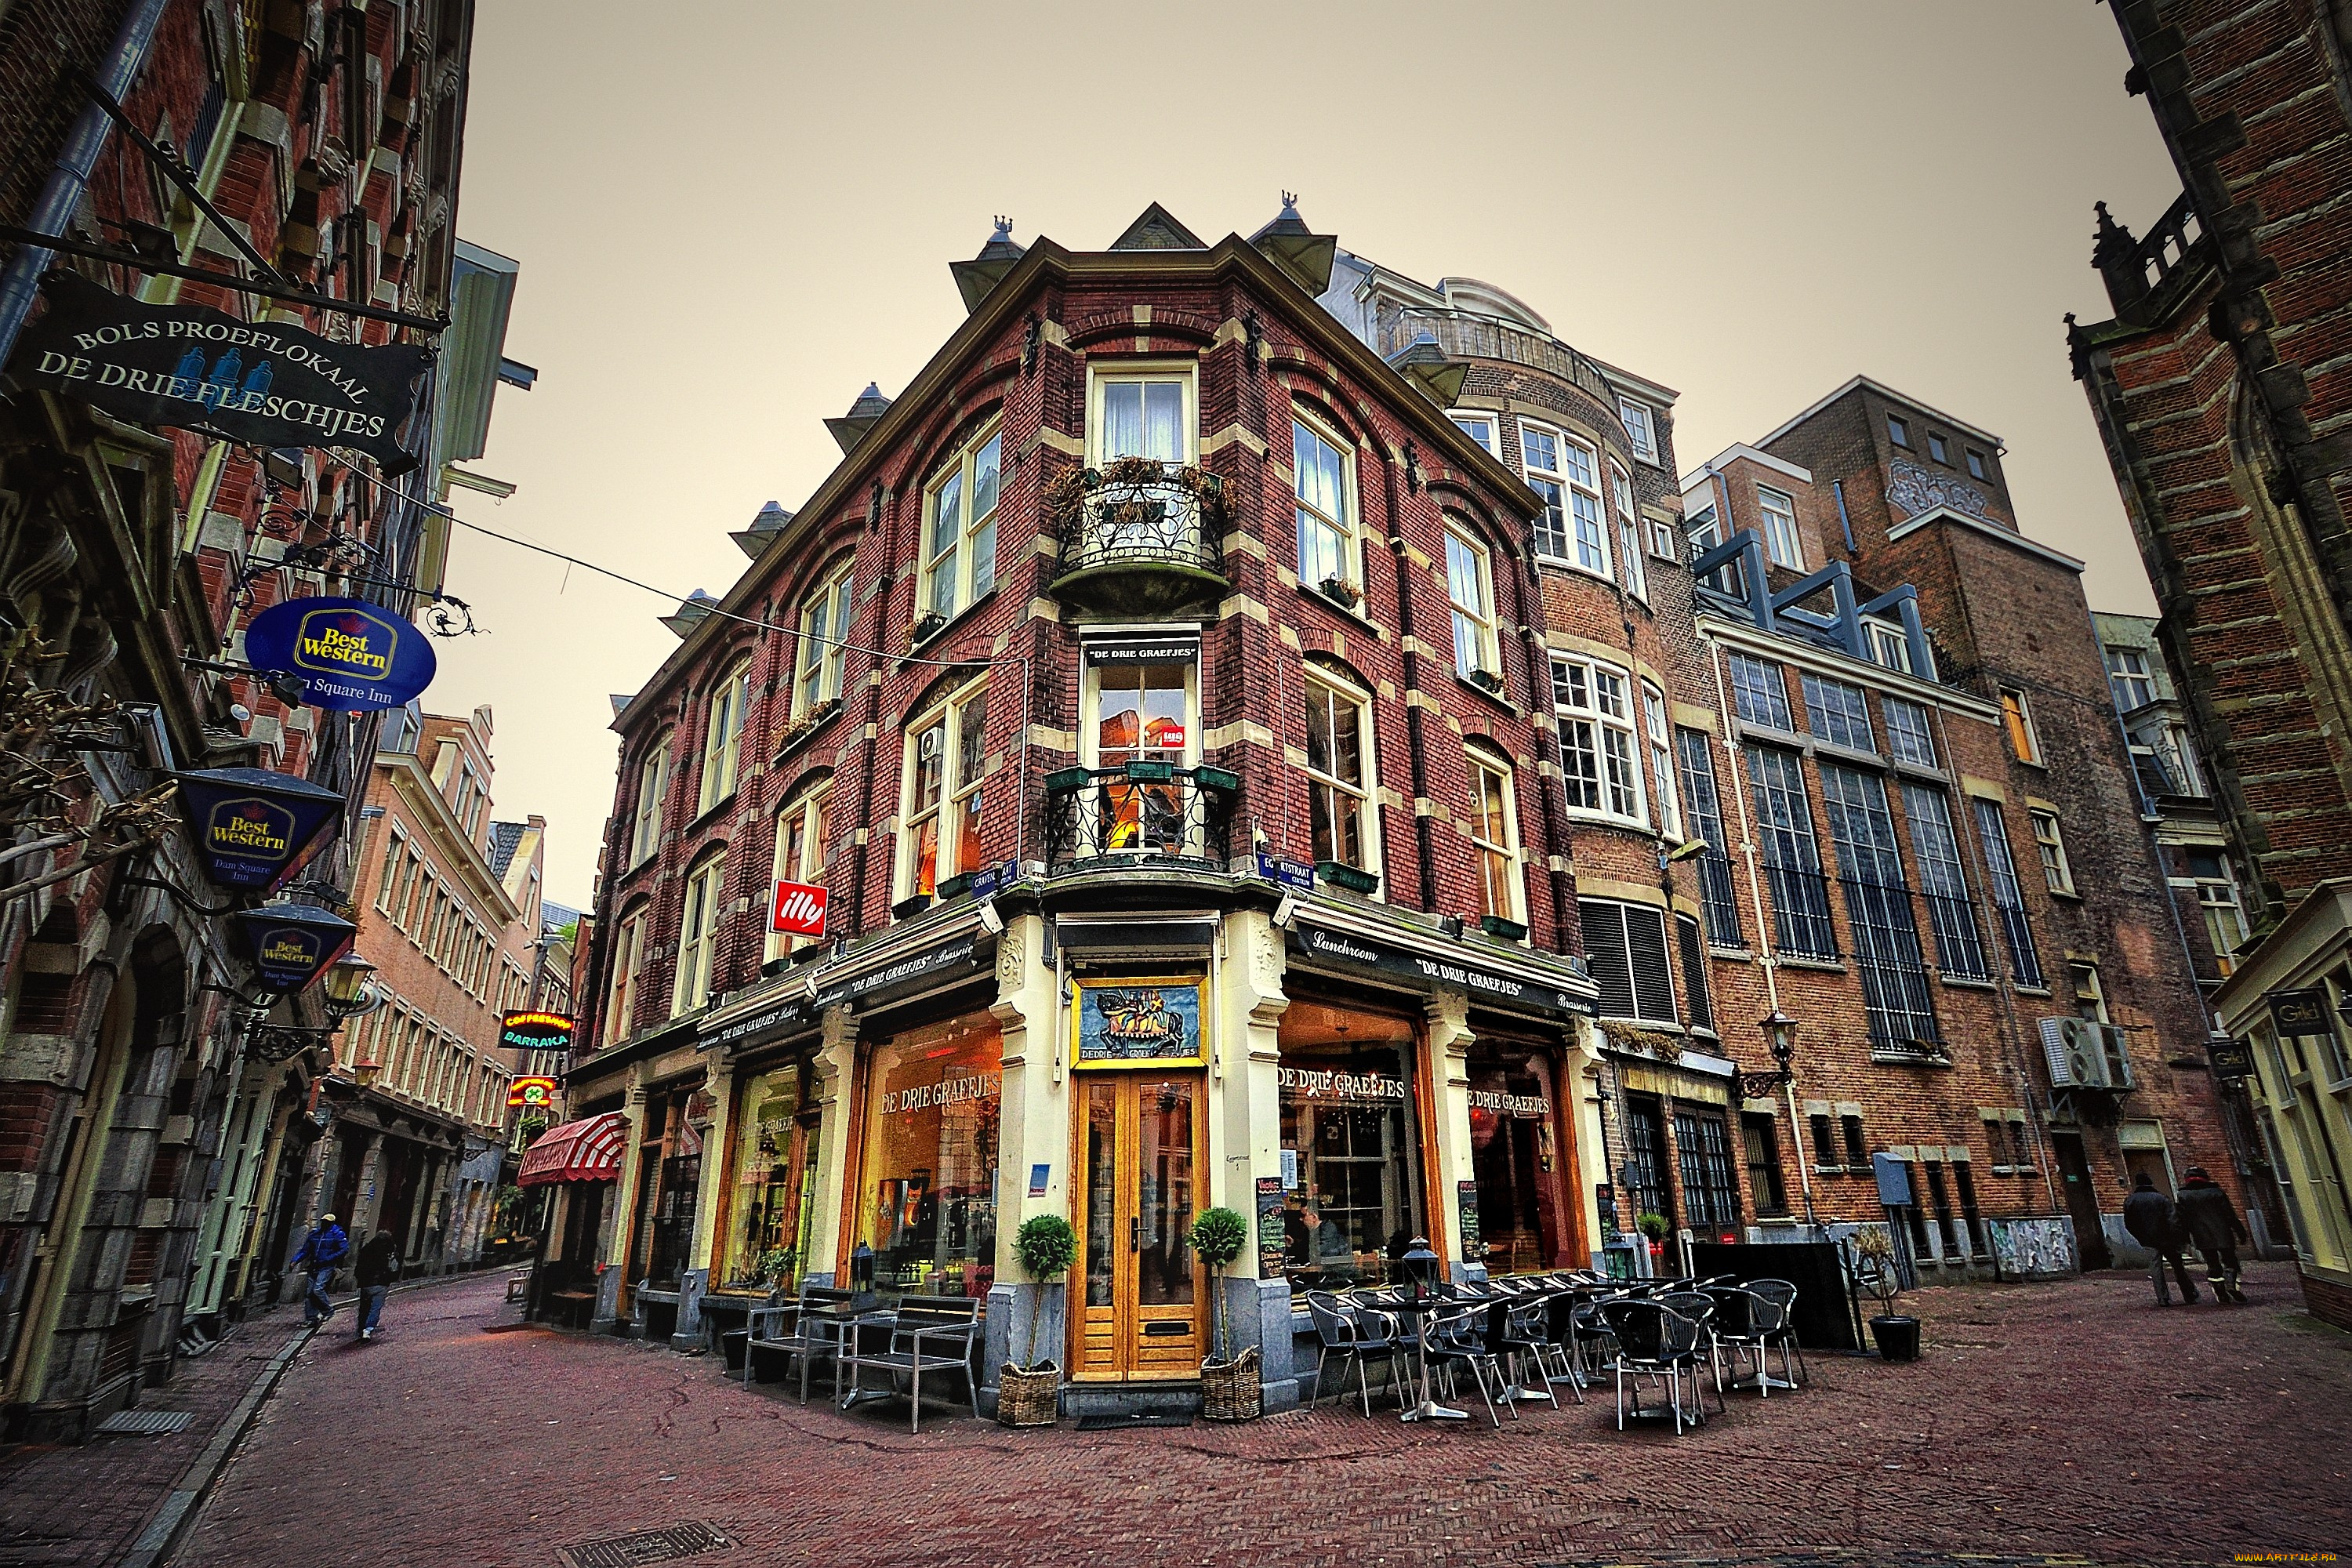 амстердам, нидерланды, города, брусчатка, кафе, вывески, дом, улица